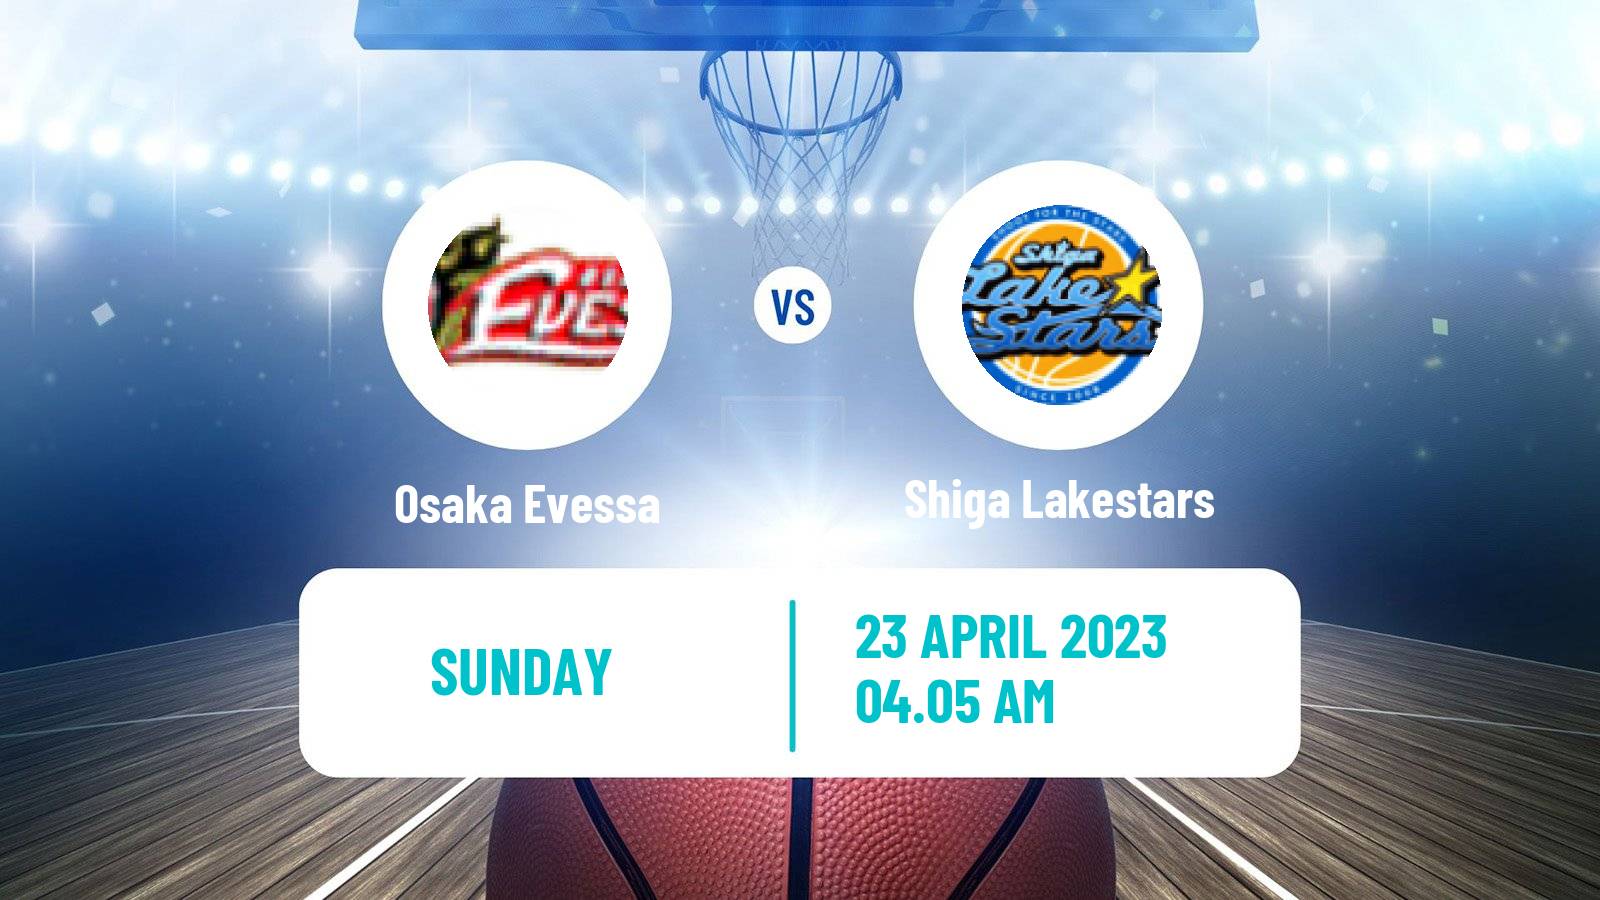 Basketball BJ League Osaka Evessa - Shiga Lakestars